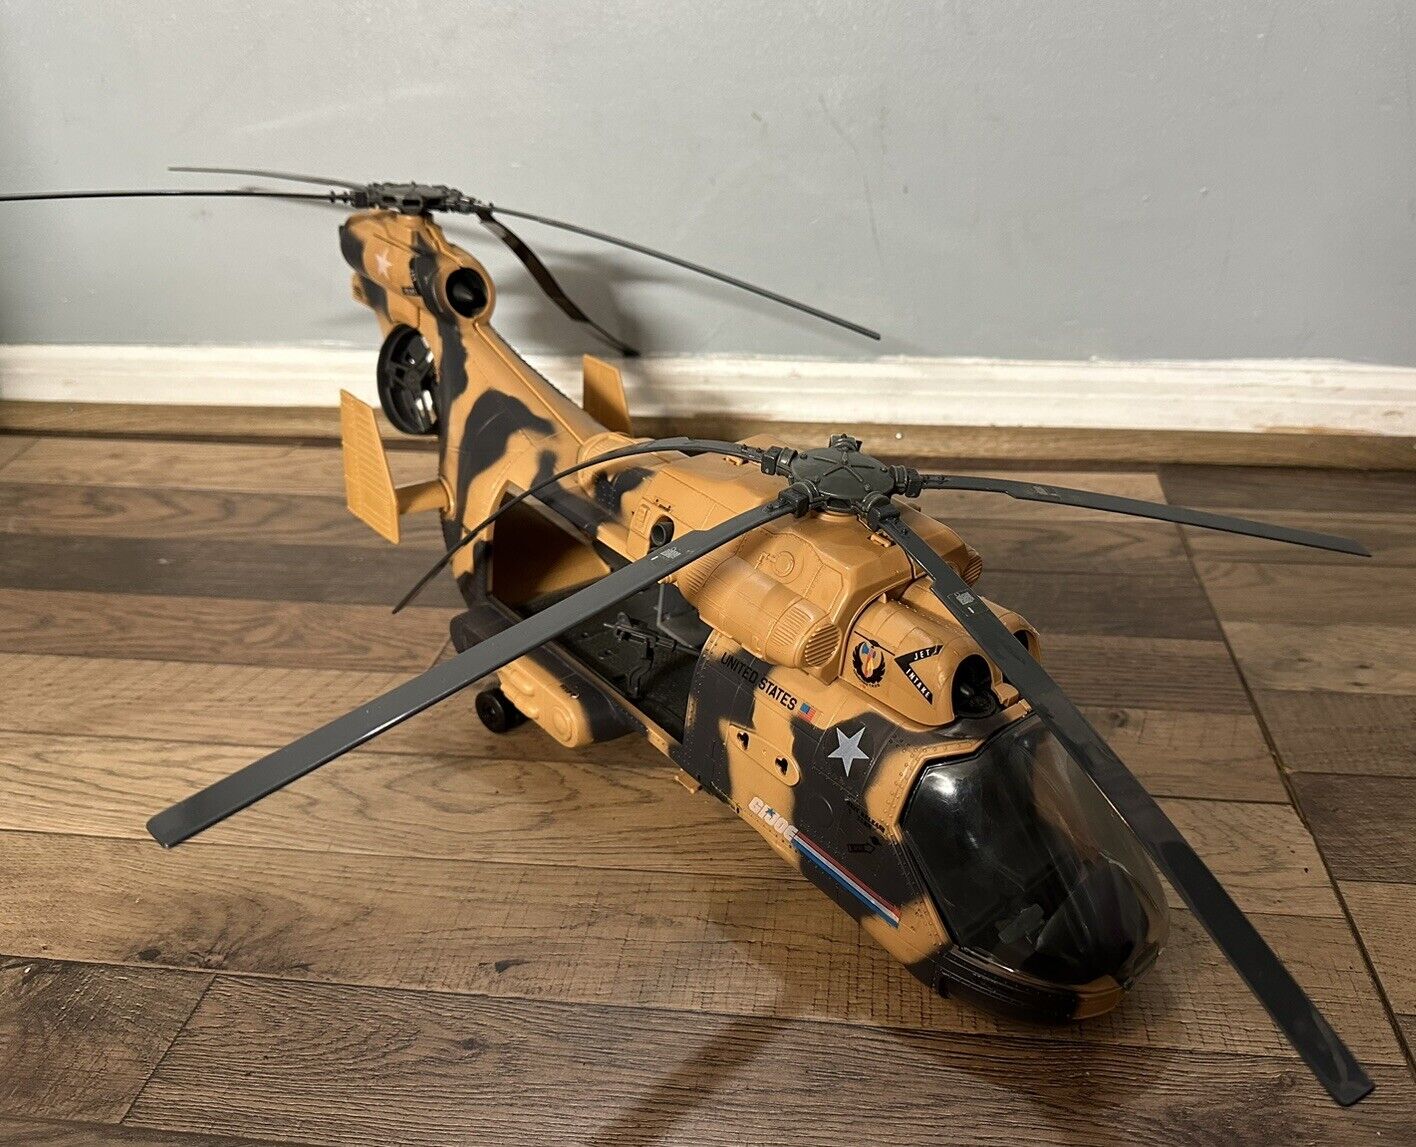 Vintage 1986 GI Joe Tomahawk Helicopter Chopper Incomplete Missing Parts